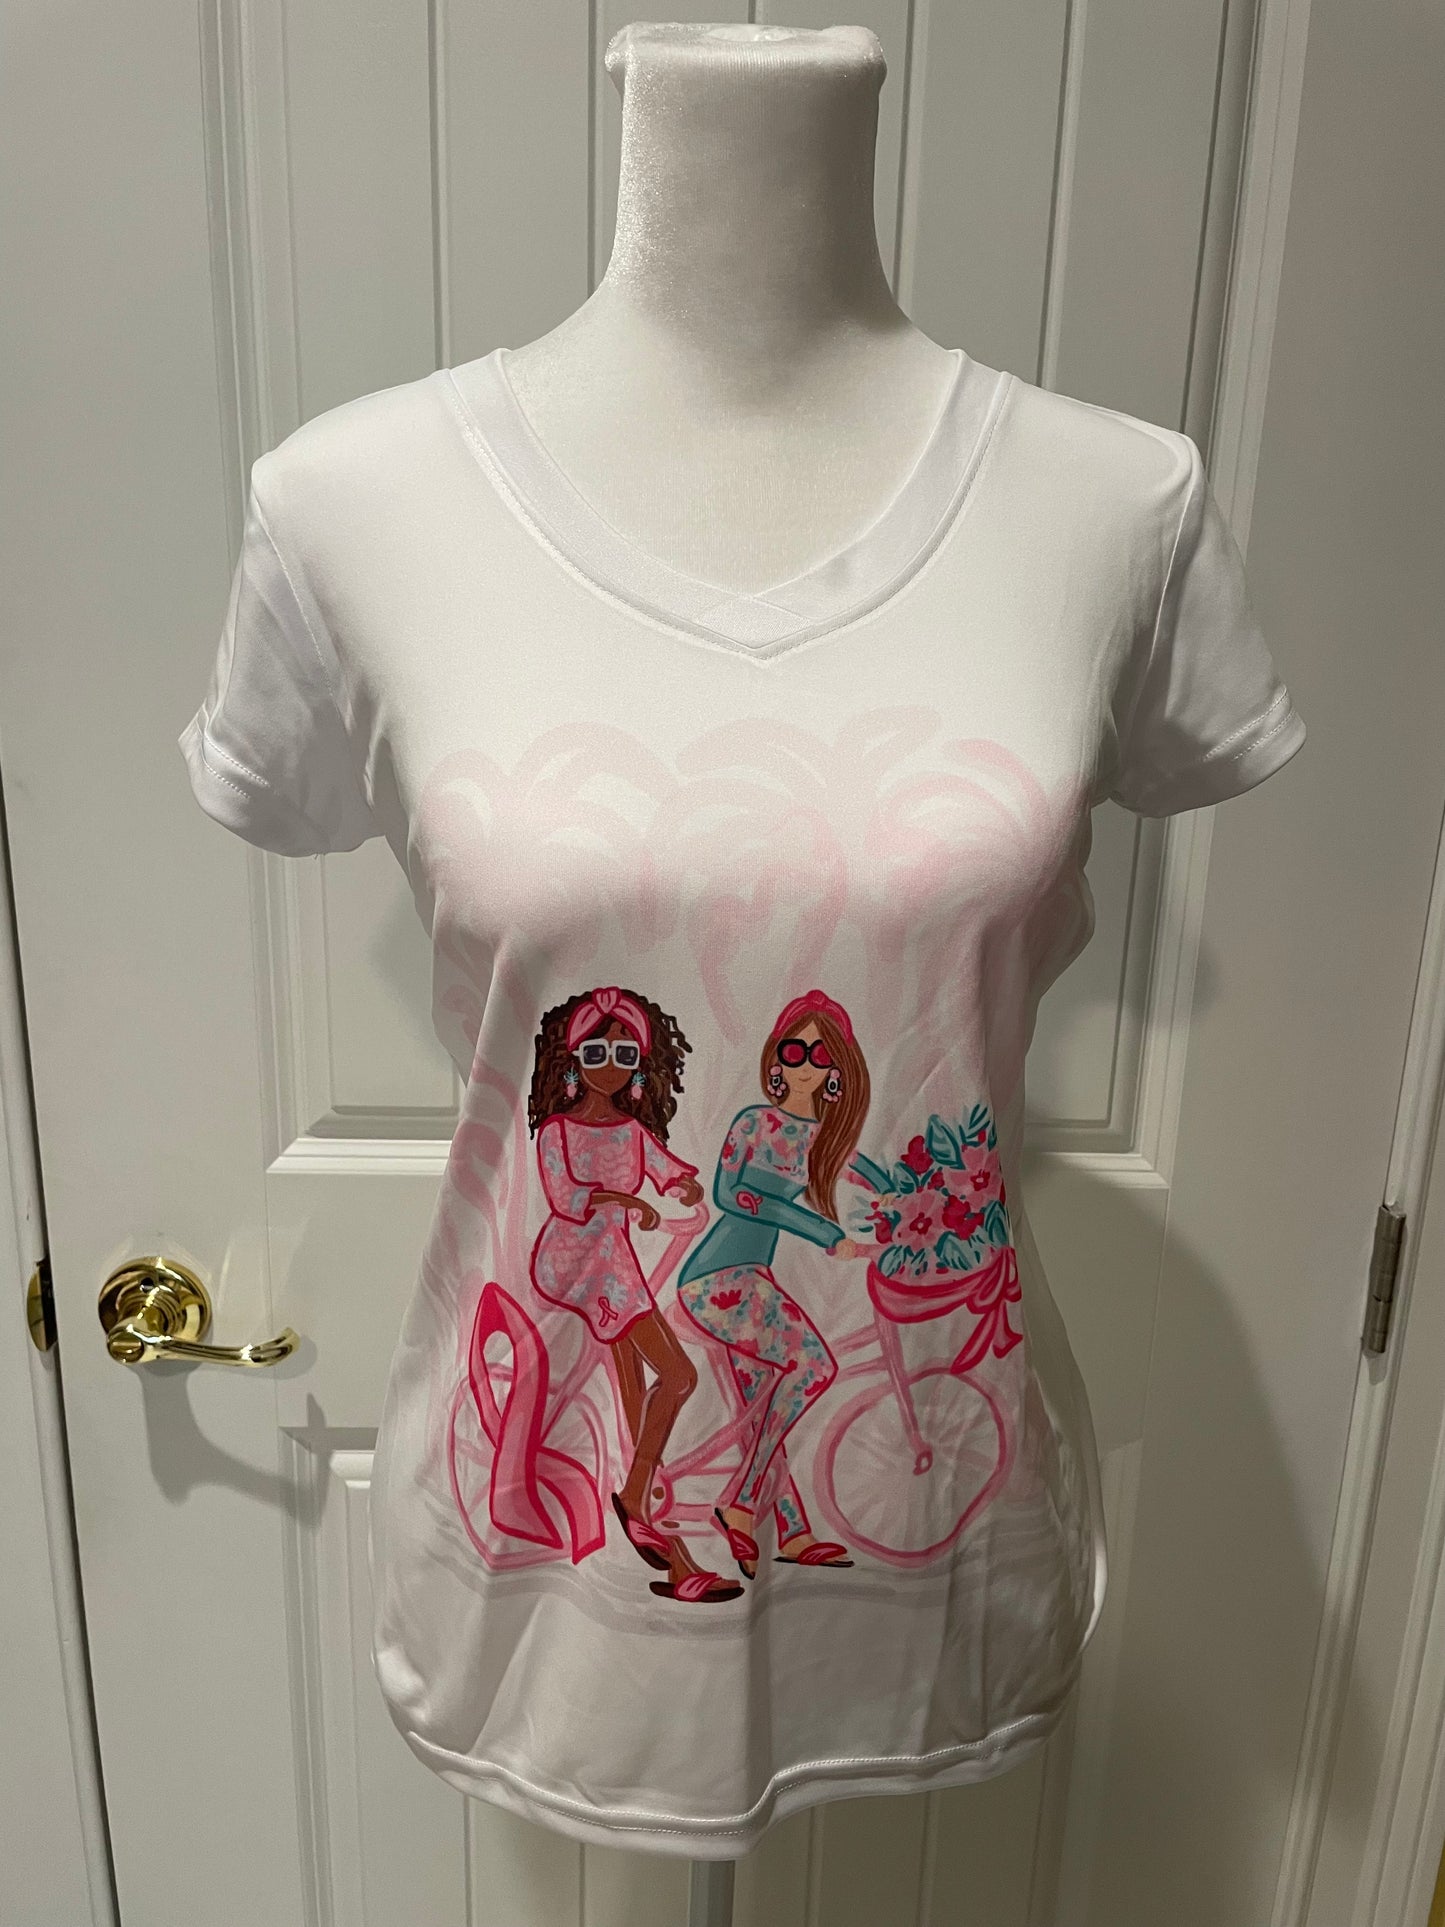 SALE! "Pinktober" Breast Cancer Illustration Shirts